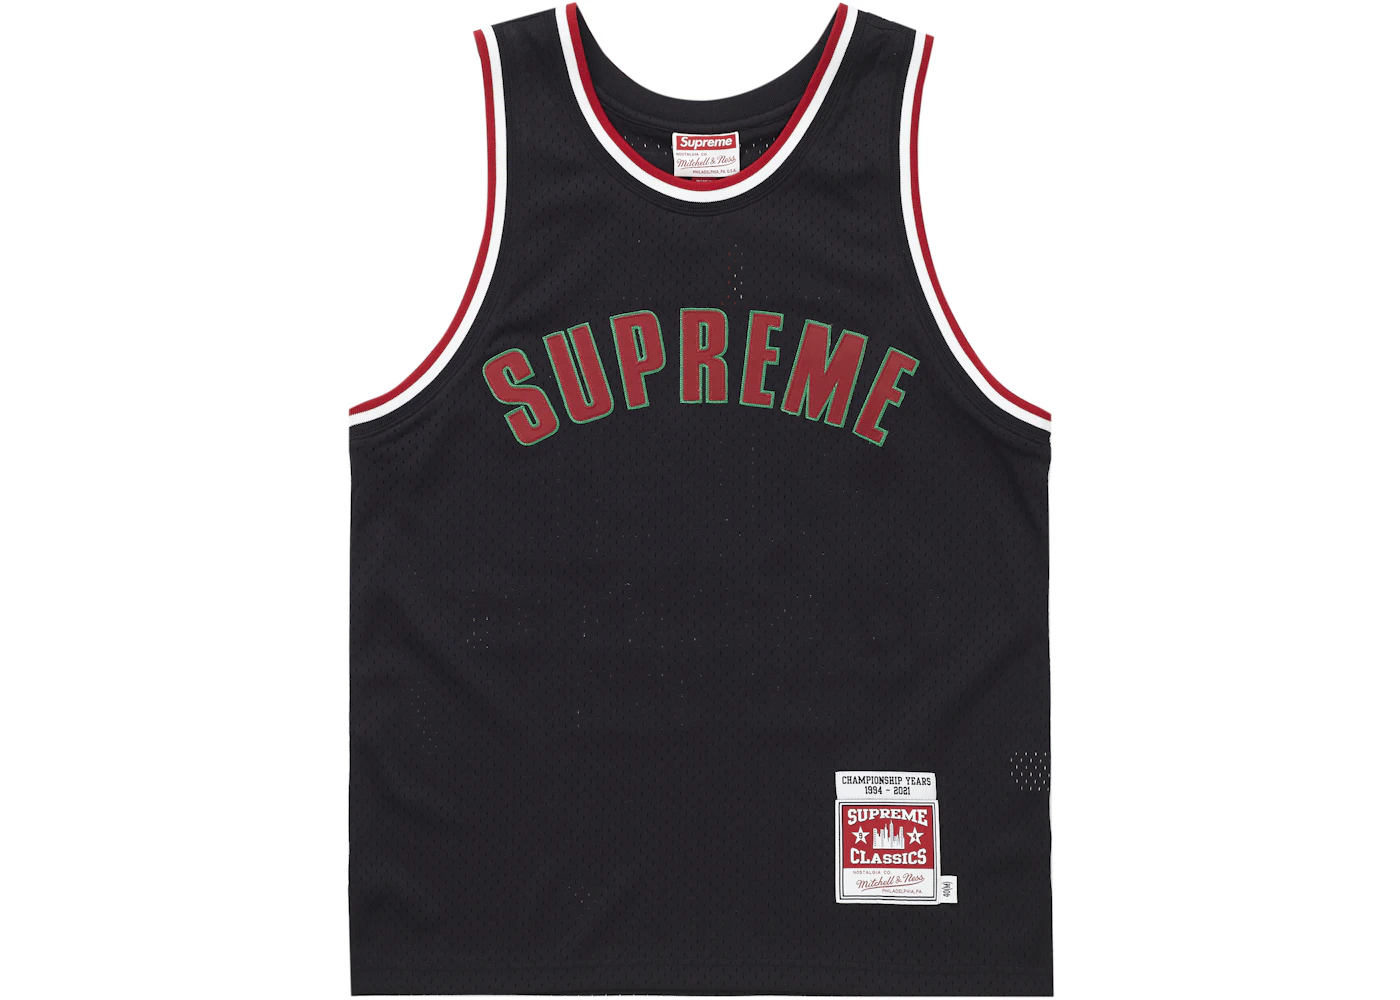 Supreme Men's Mitchell&Ness Basketball Jersey